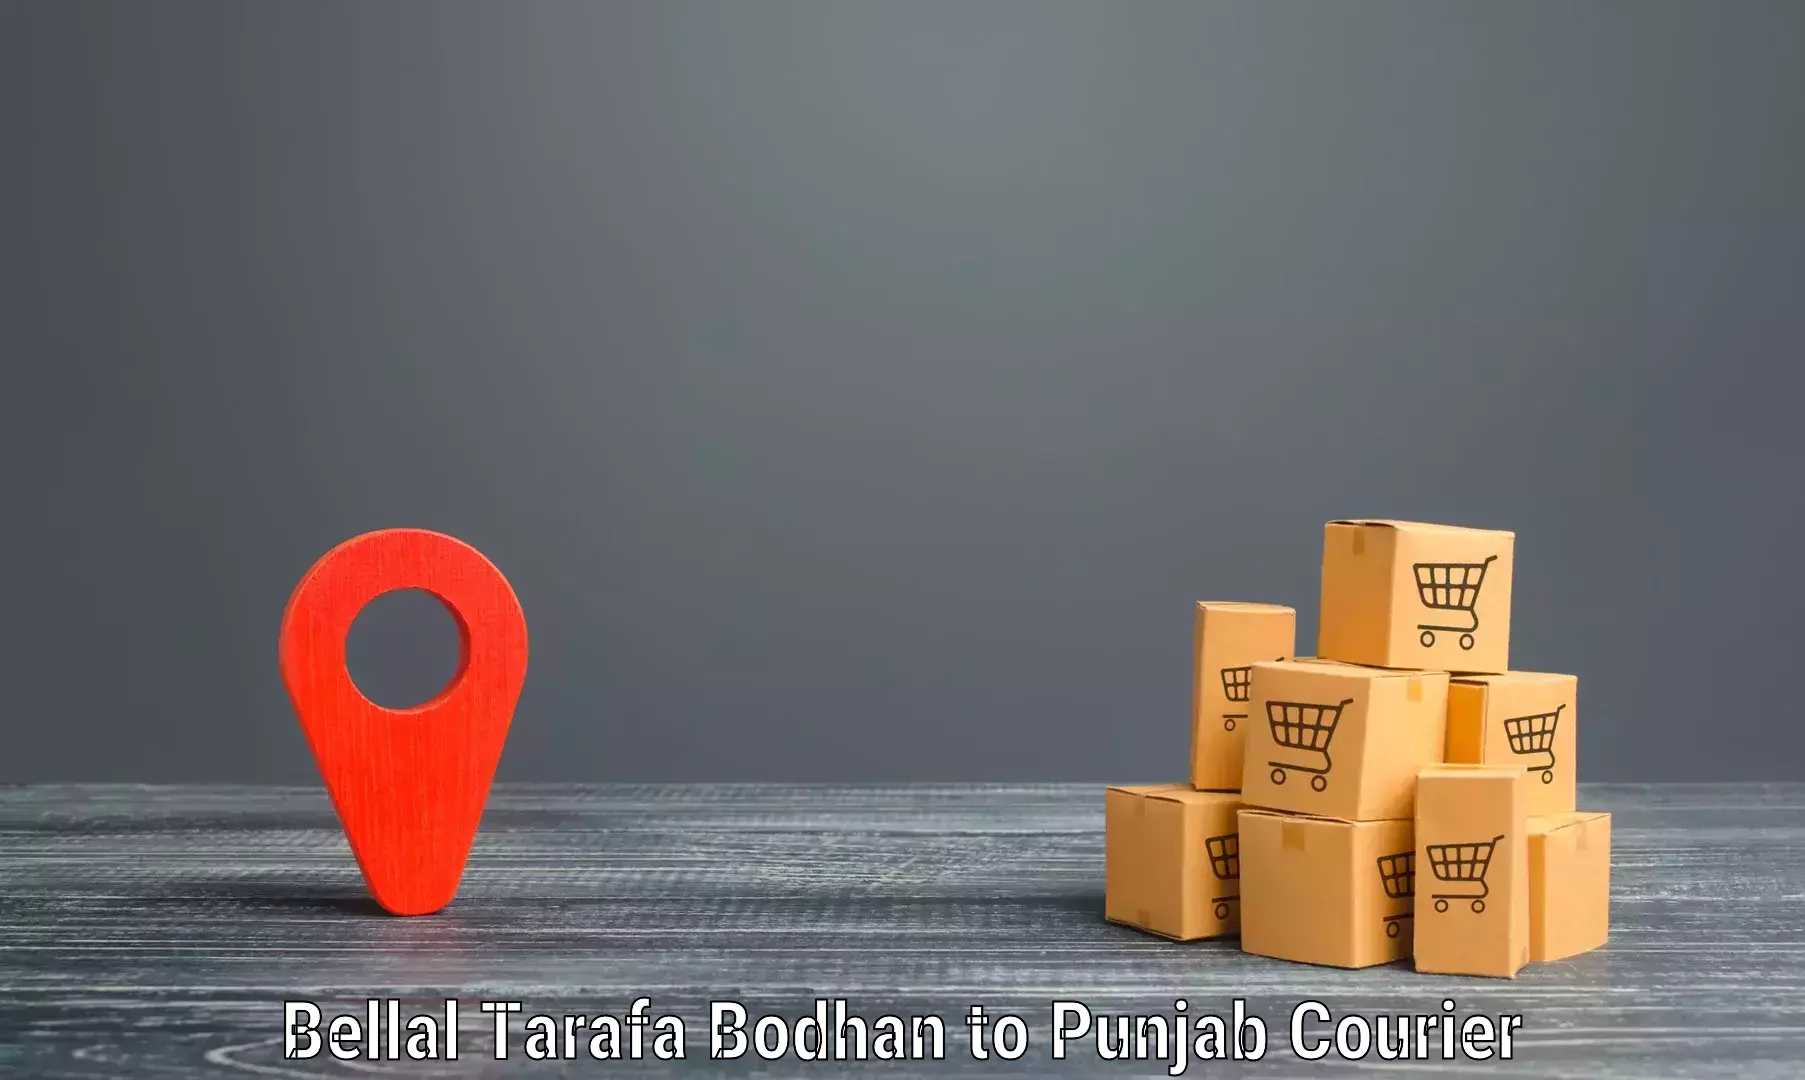 Logistics and distribution Bellal Tarafa Bodhan to Punjab